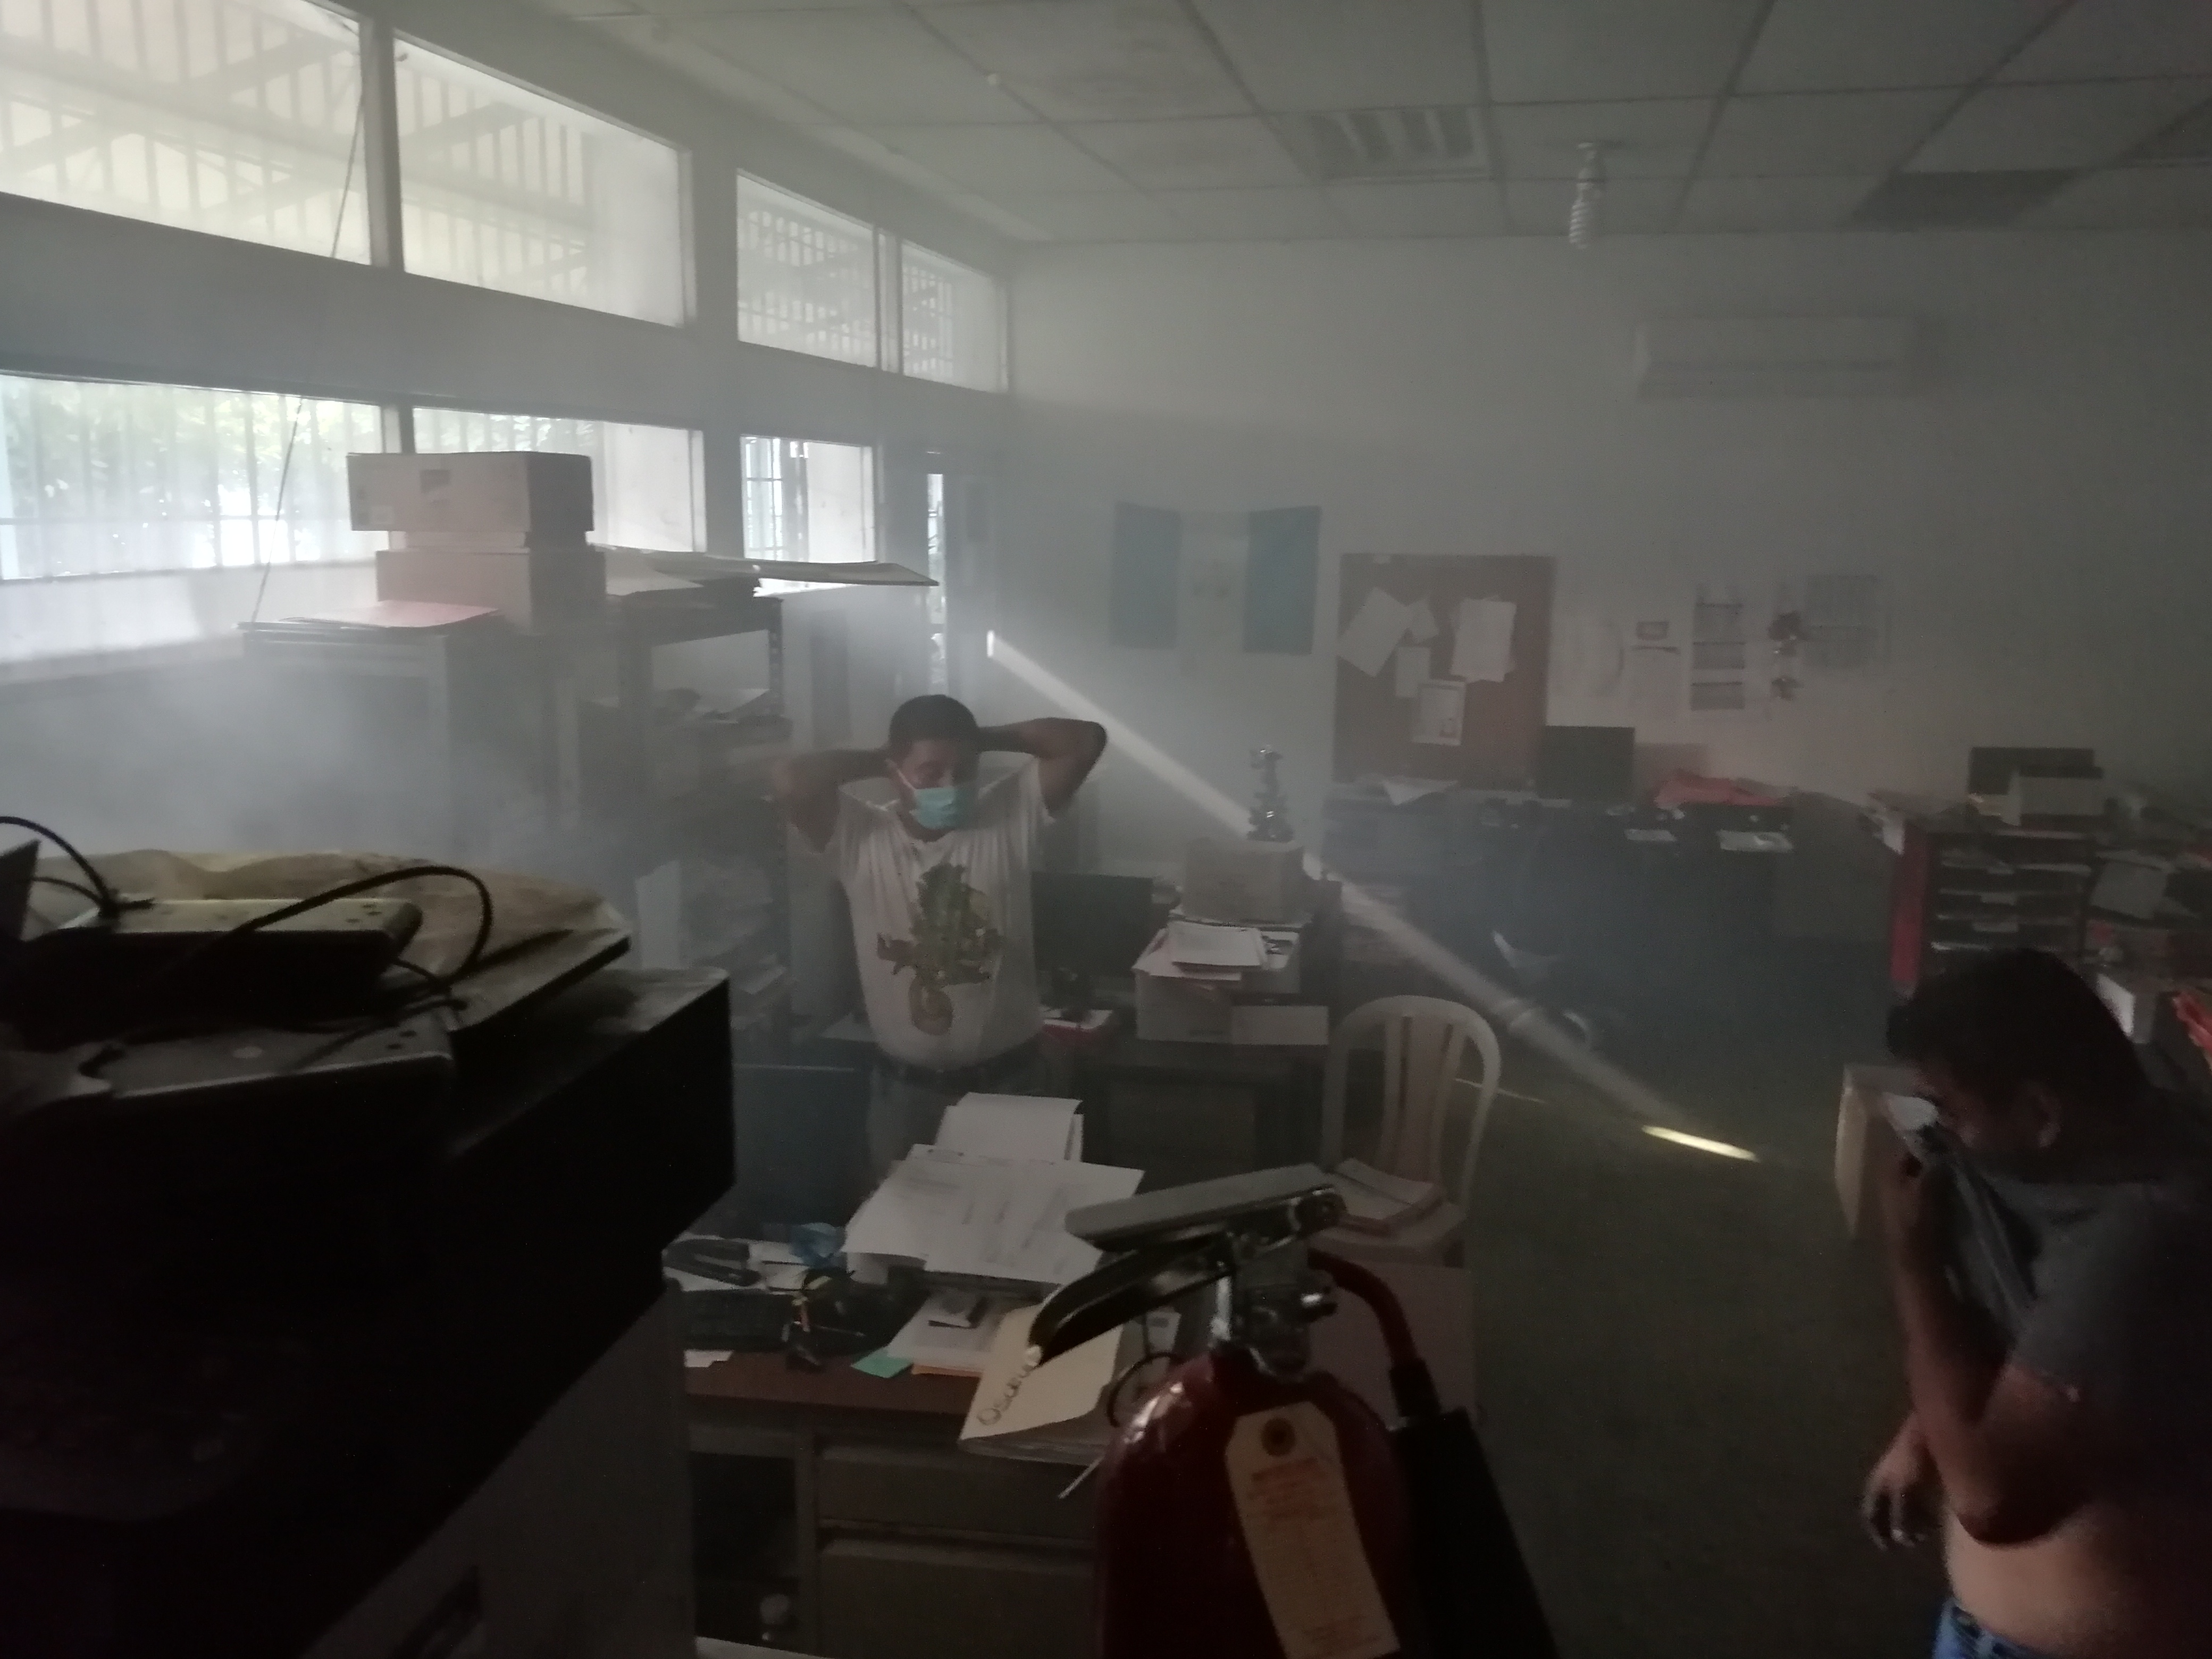 El incendio en la oficina inició a las 4 am, según reportó el personal del Hospital. (Foto Prensa Libre: Cortesía)